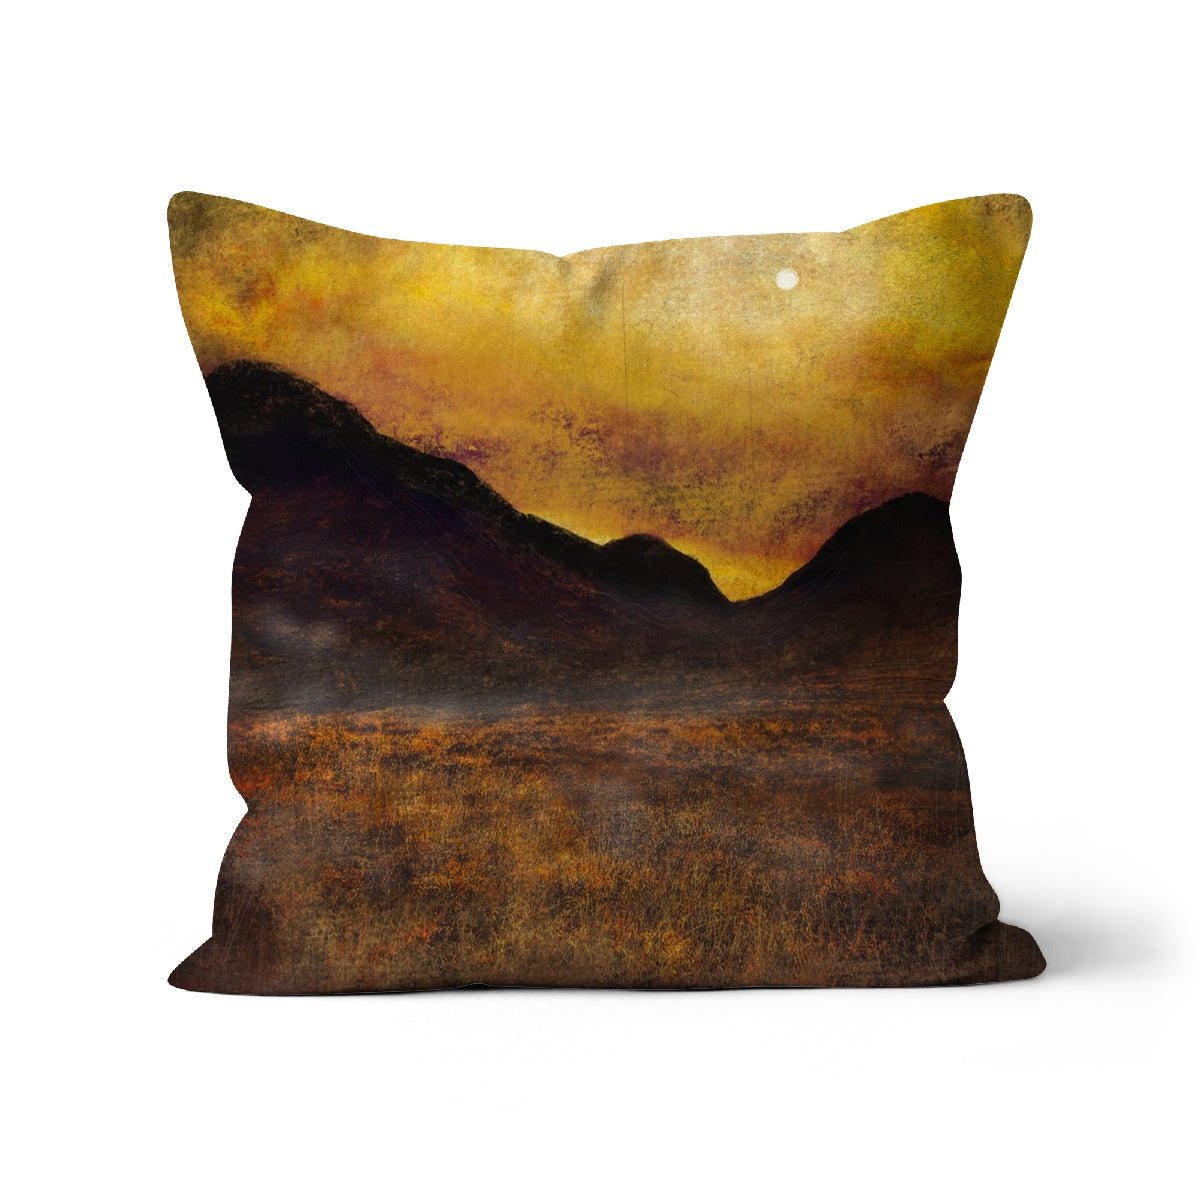 Glencoe Moonlight Art Gifts Cushion-Cushions-Glencoe Art Gallery-Linen-24"x24"-Paintings, Prints, Homeware, Art Gifts From Scotland By Scottish Artist Kevin Hunter